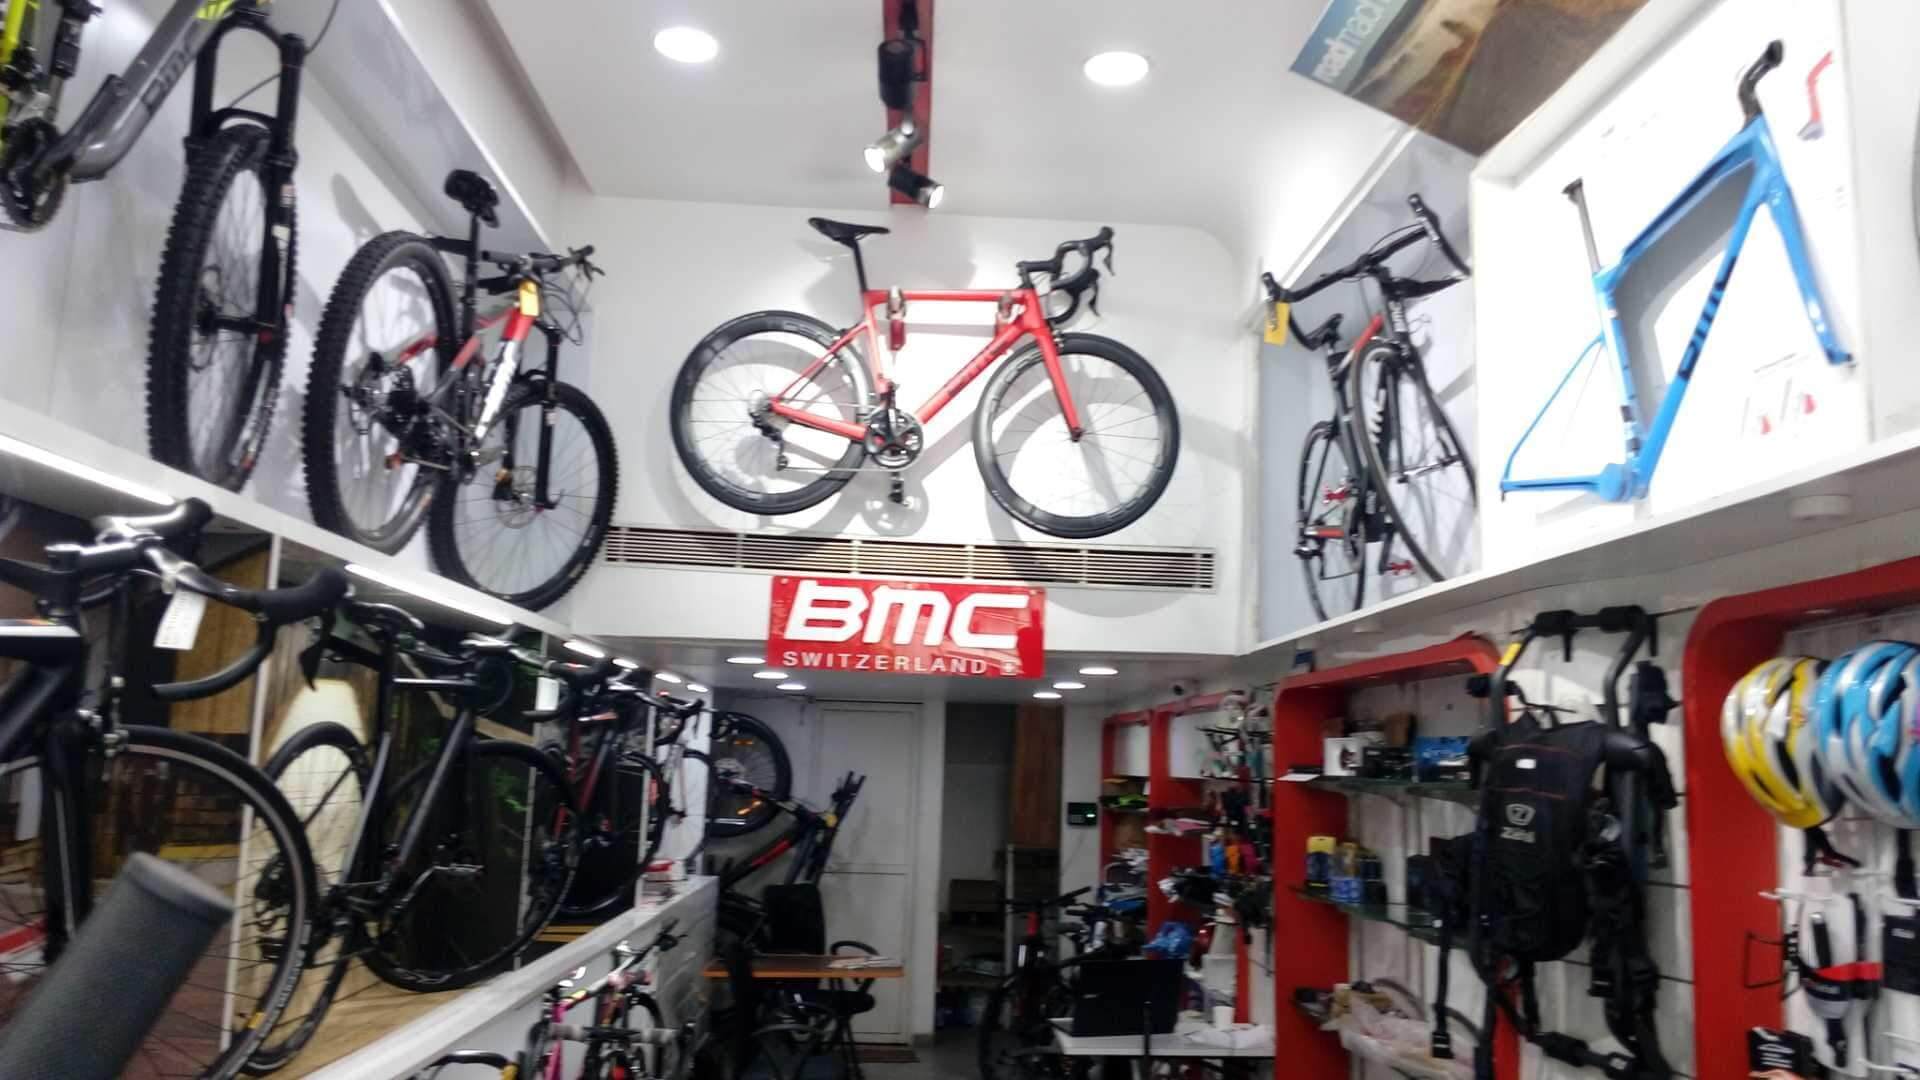 Cycle showroom